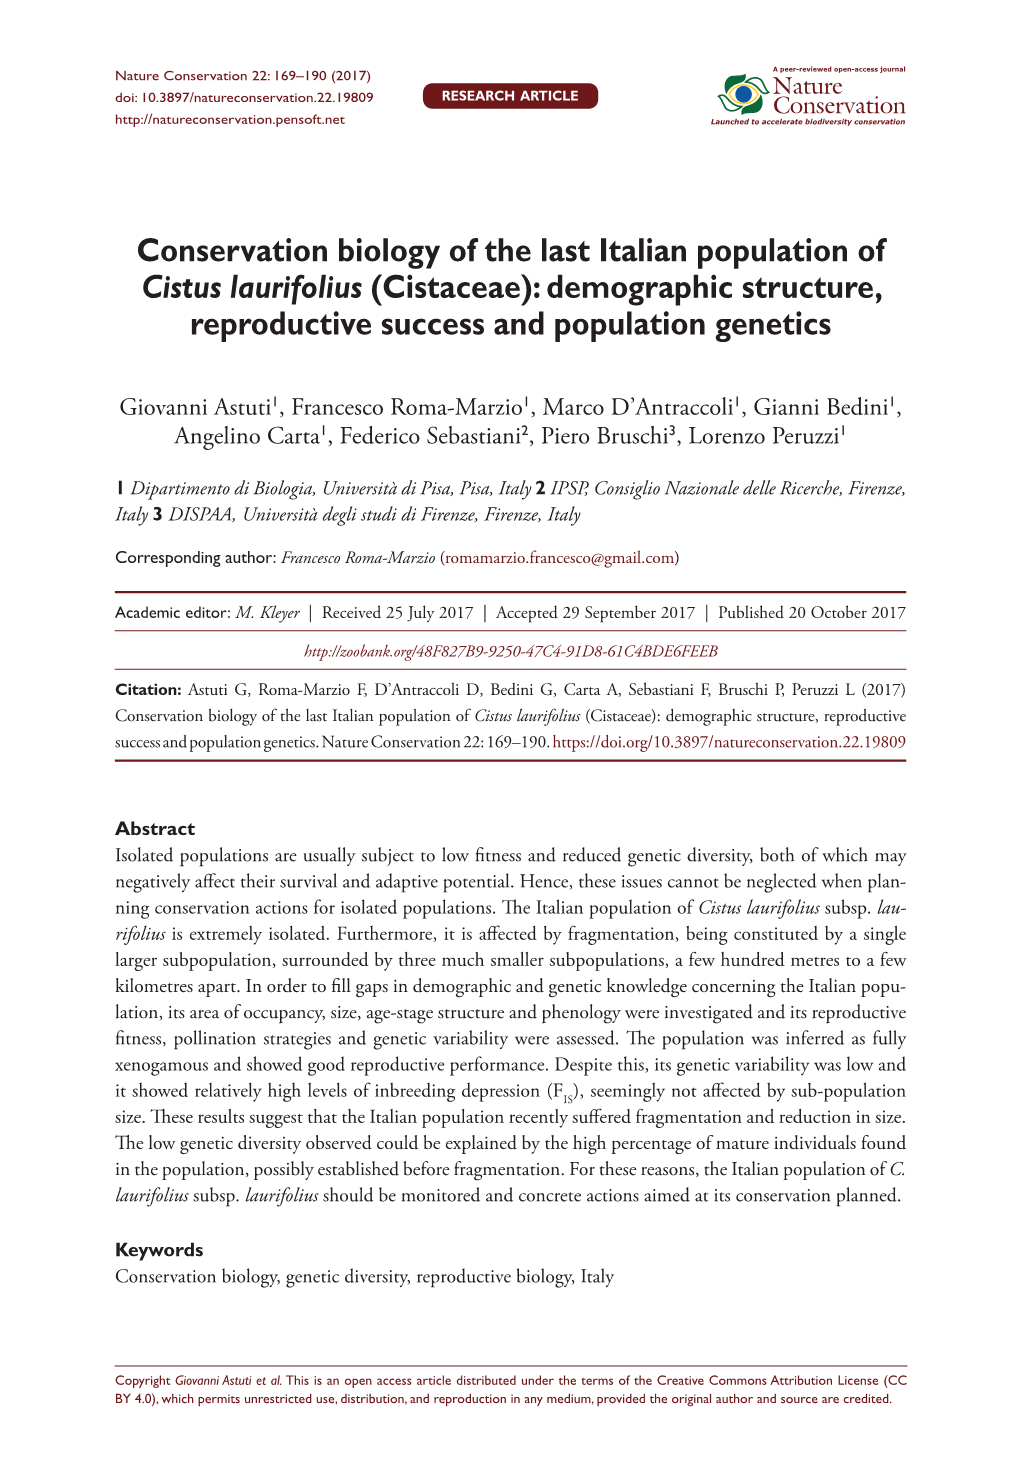 Conservation Biology of the Last Italian Population of Cistus Laurifolius (Cistaceae): Demographic Structure, Reproductive Success and Population Genetics